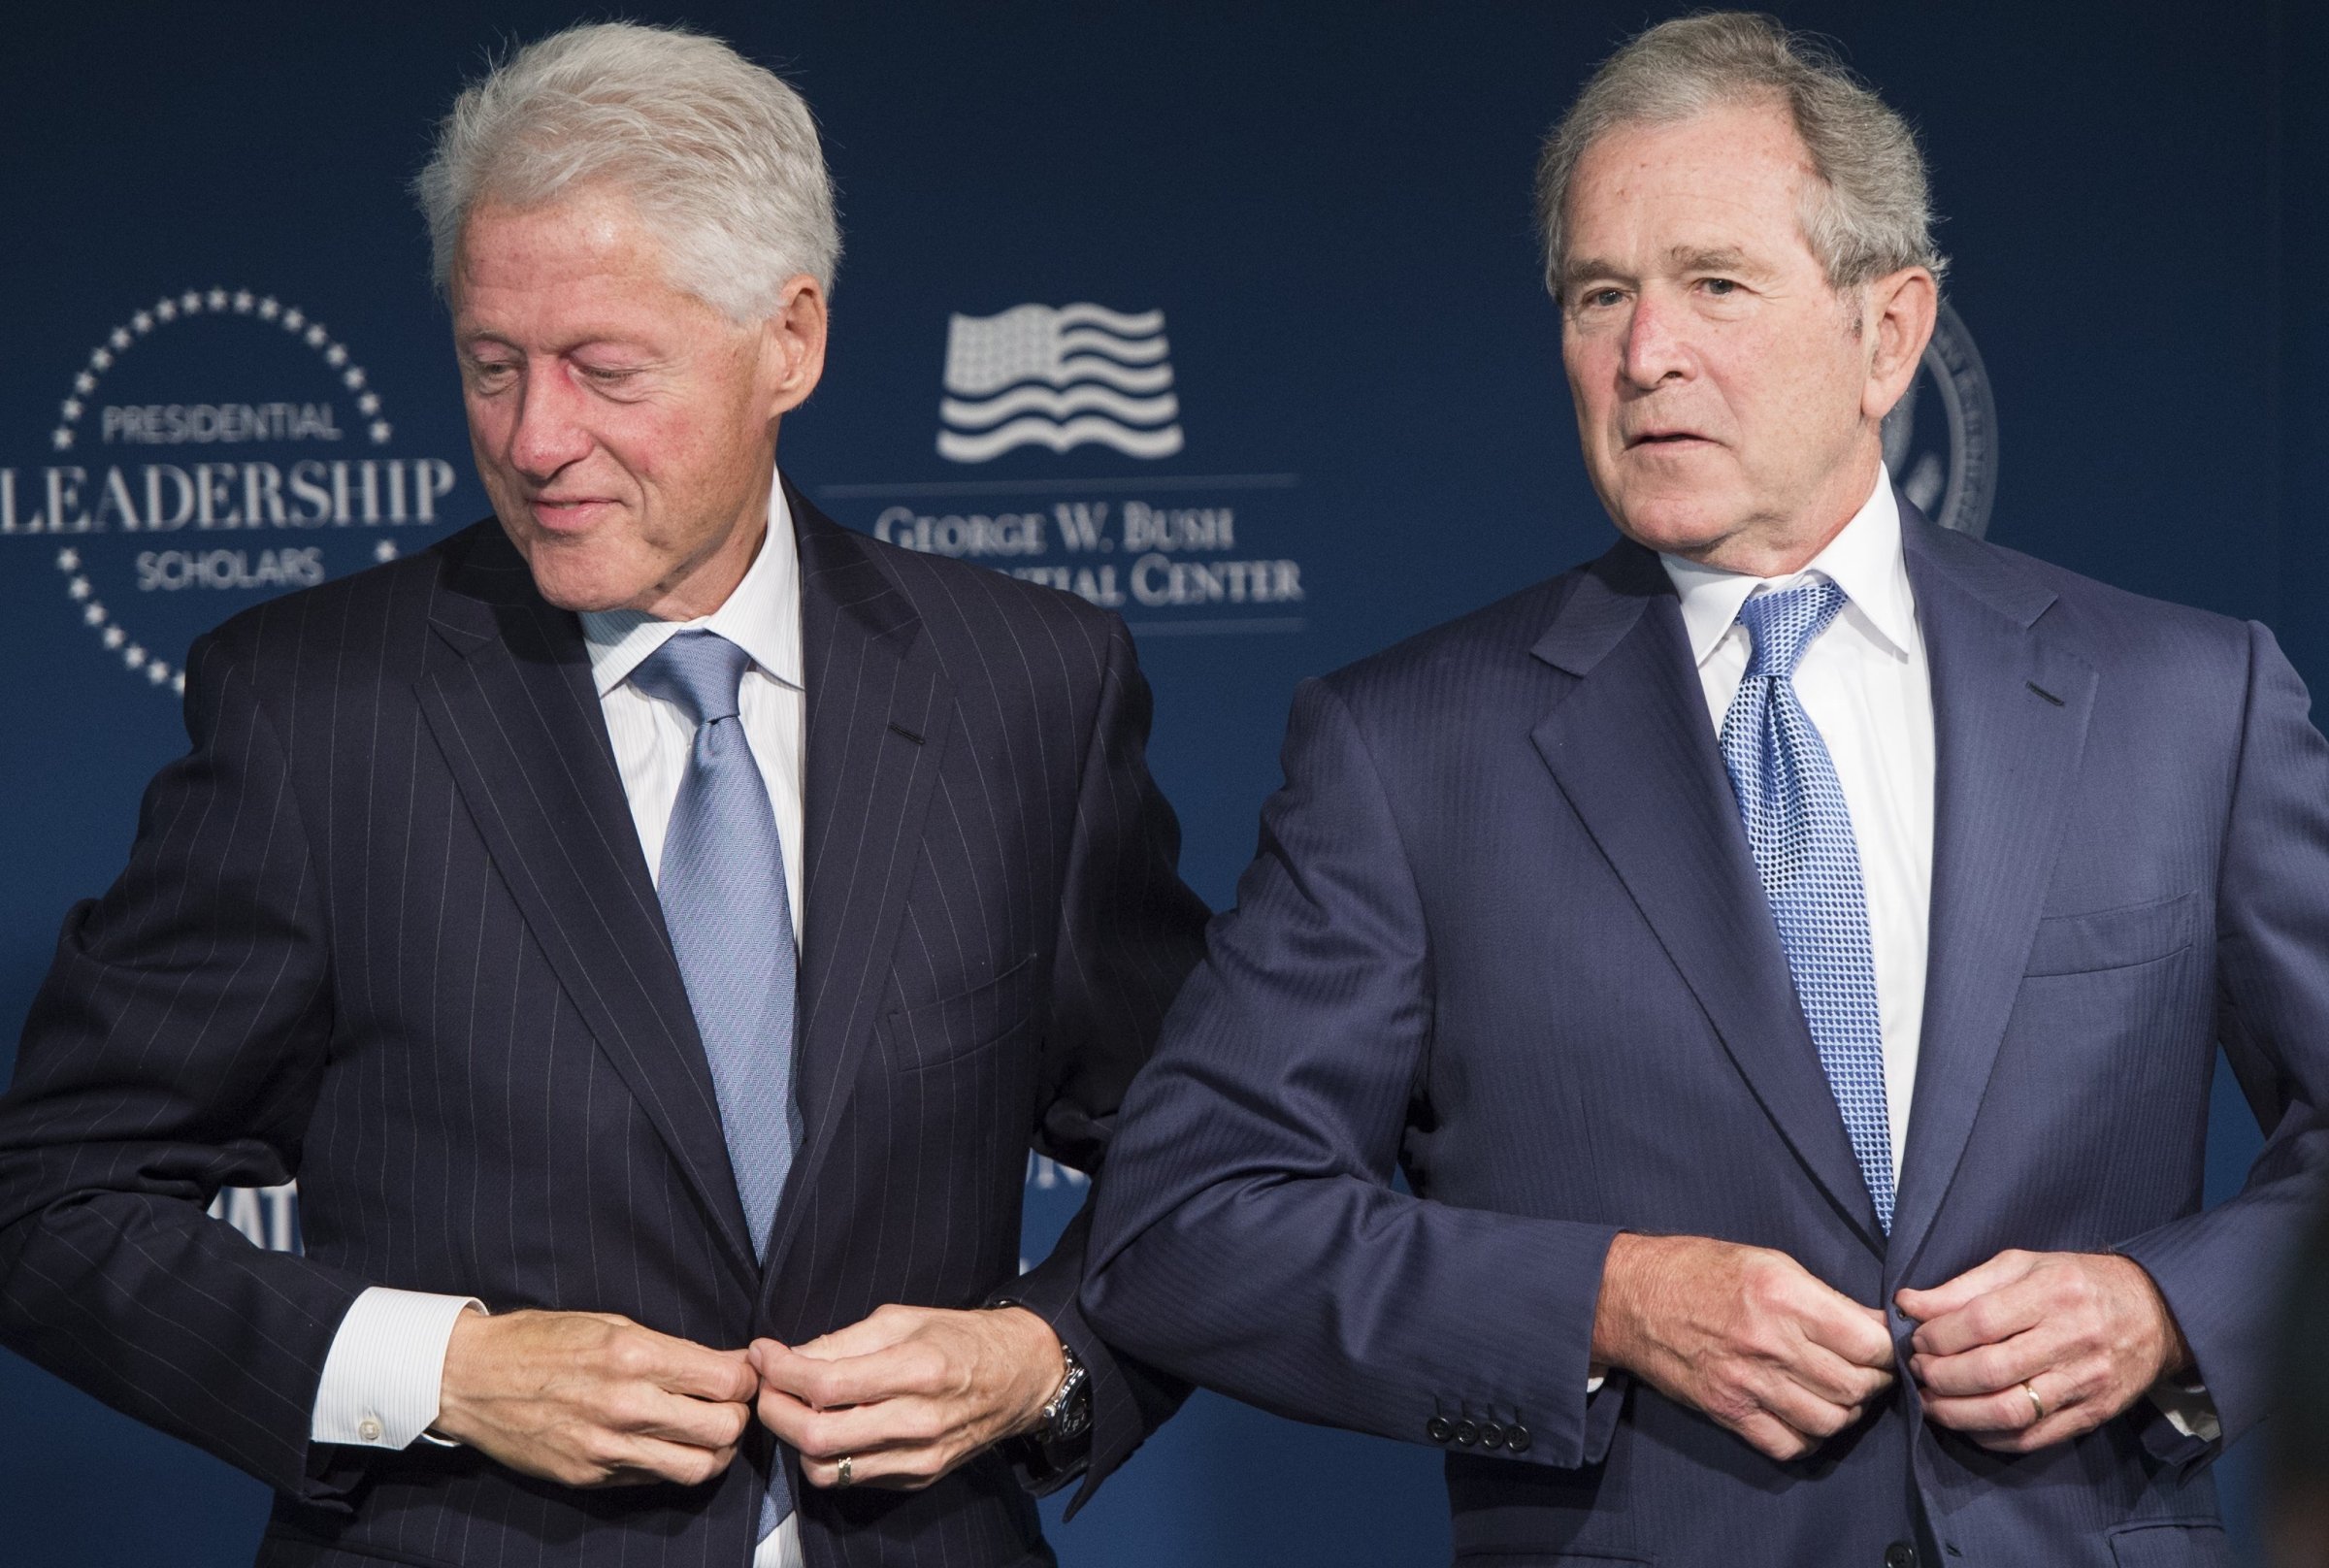 George W. Bush Bill Clinton Presidential Leadership Program